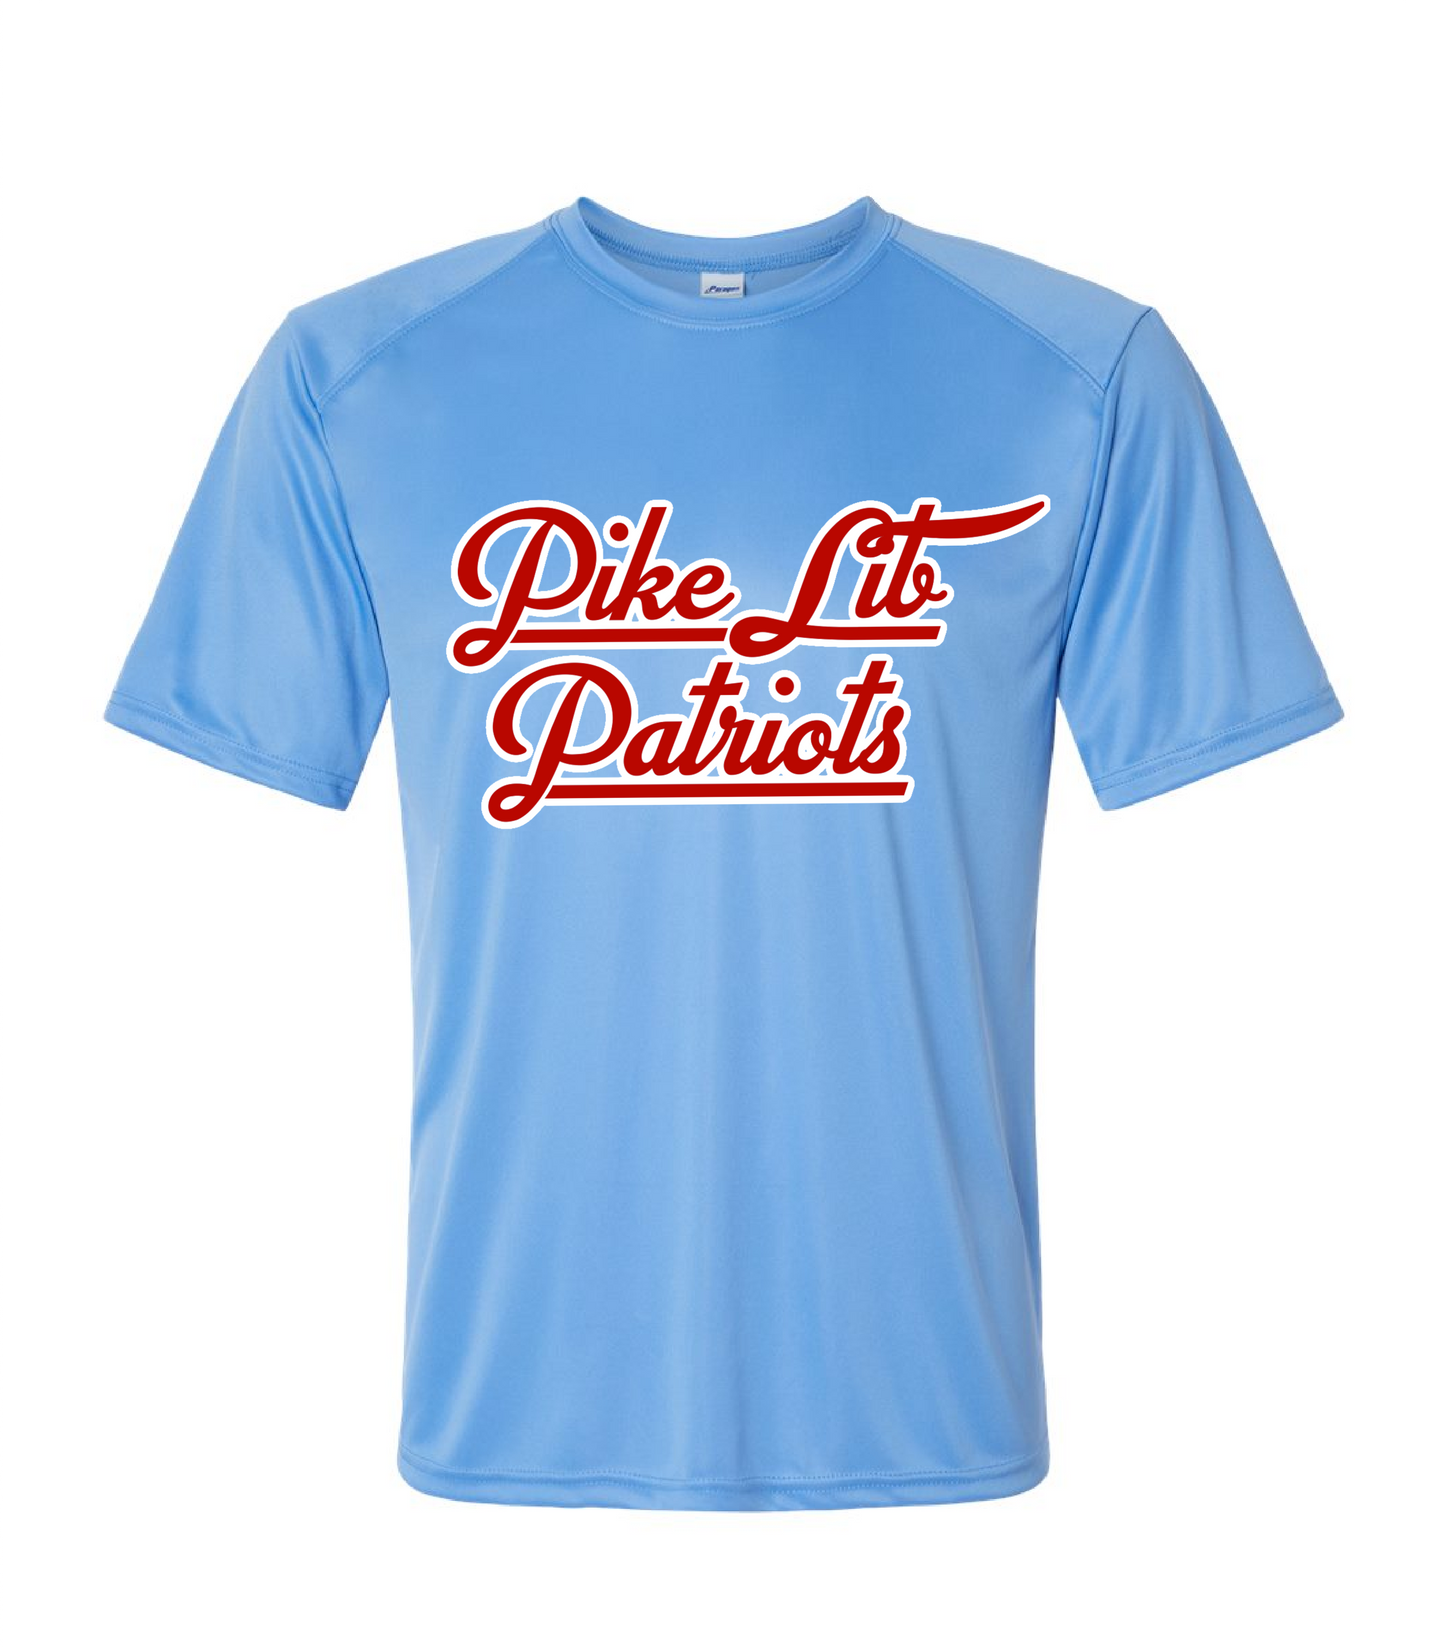 Long or Short Sleeve/ Dryfit or Soft Style Bella Pike Lib Patriots Shirt